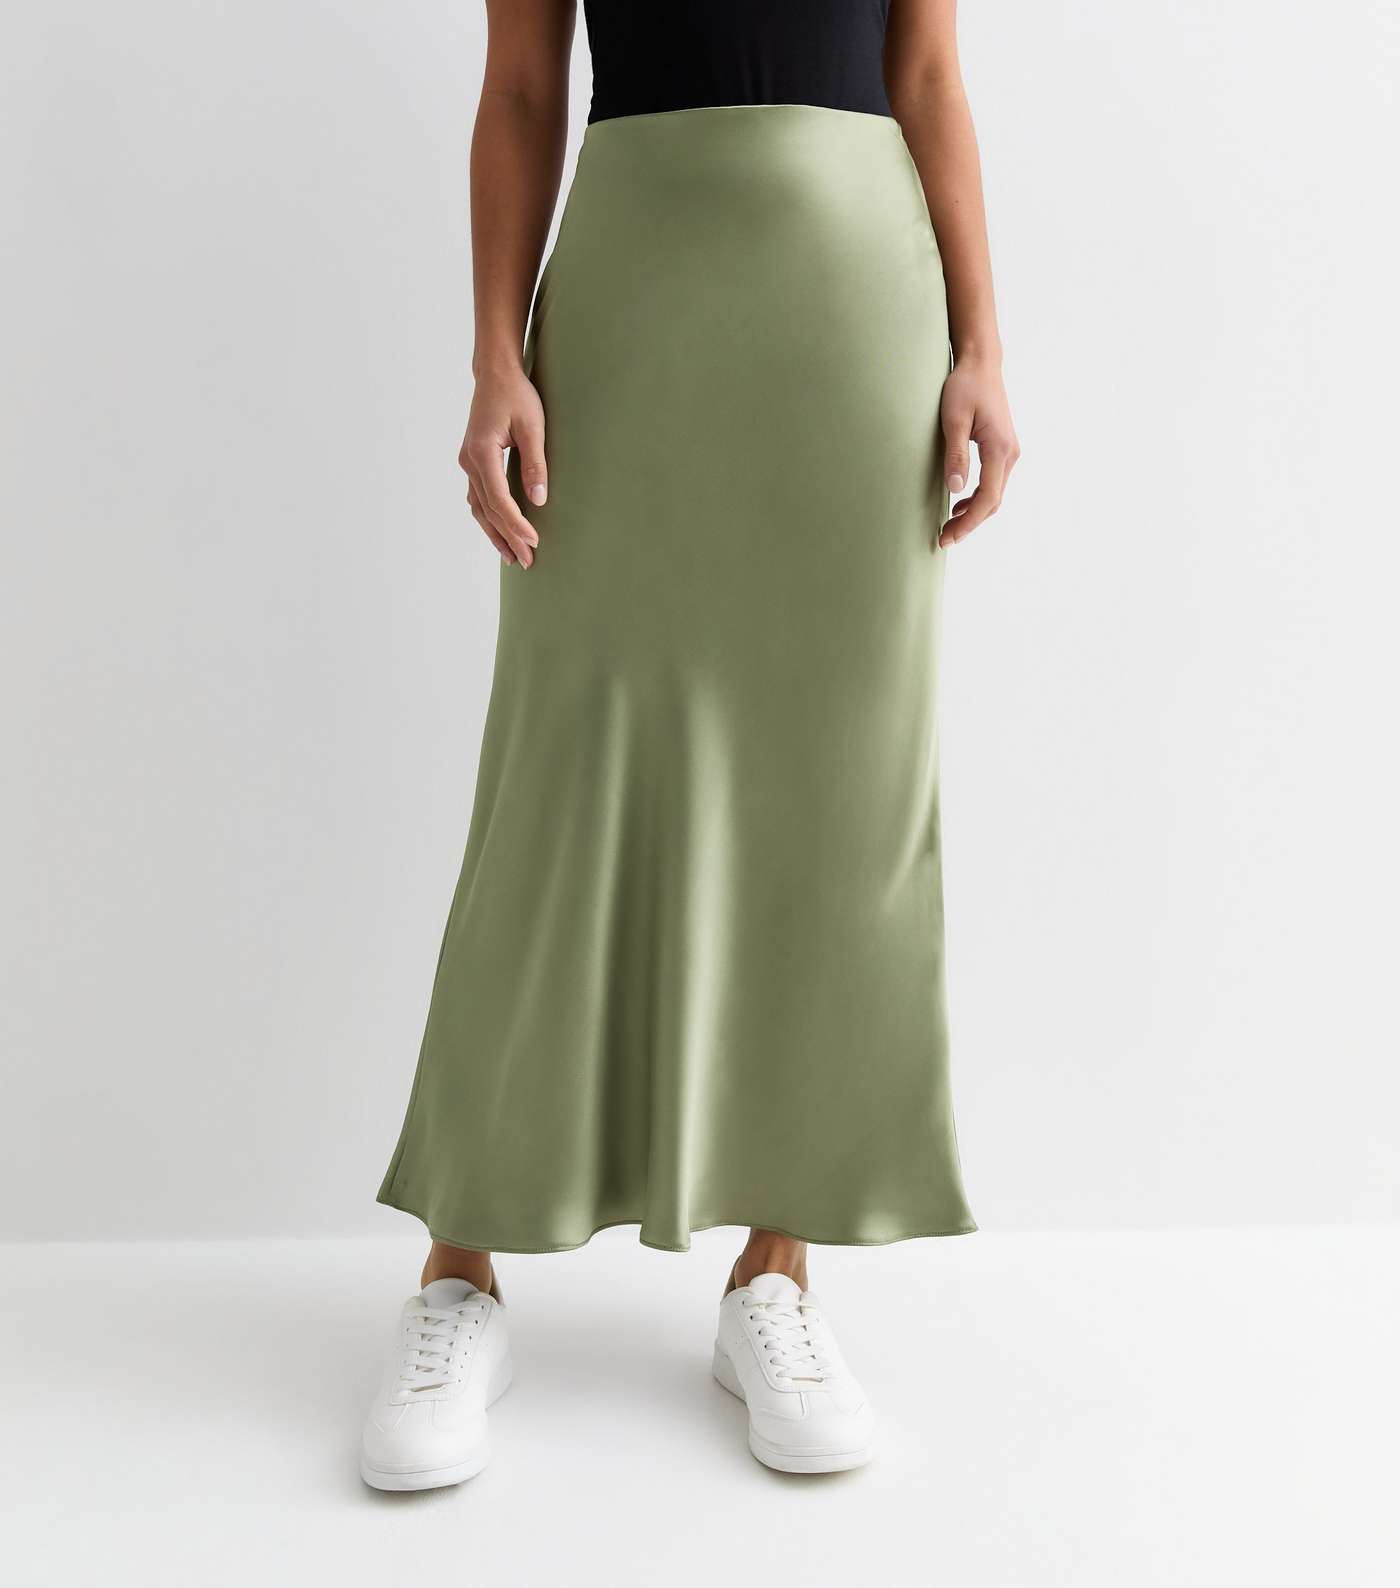 Petite Olive Satin Bias Cut Midi Skirt Image 3